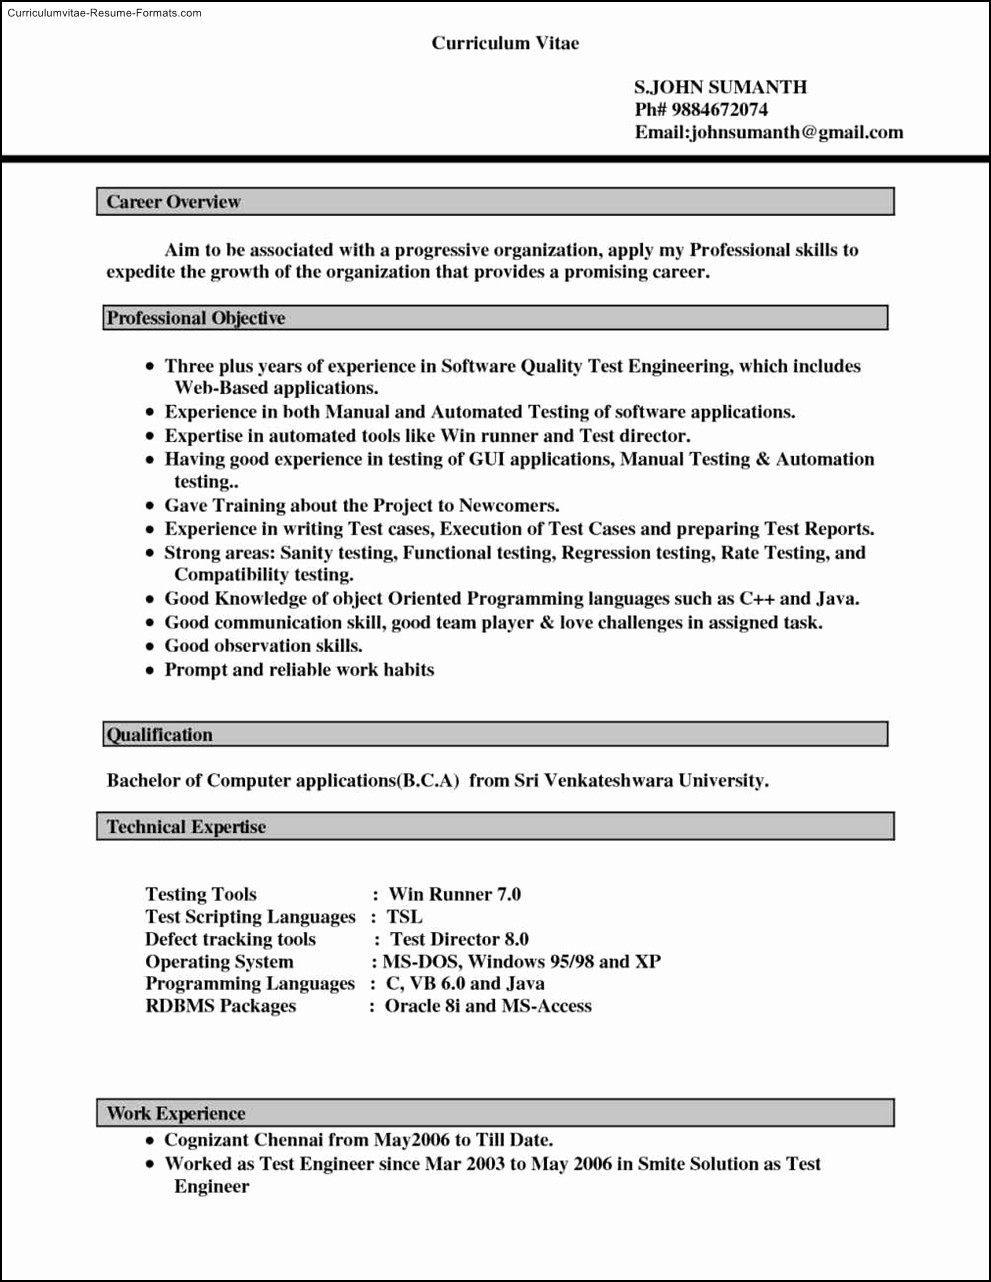 Resume Templates Microsoft Word Free Elegant Free Resume Templates for Microsoft Word 2007 Free